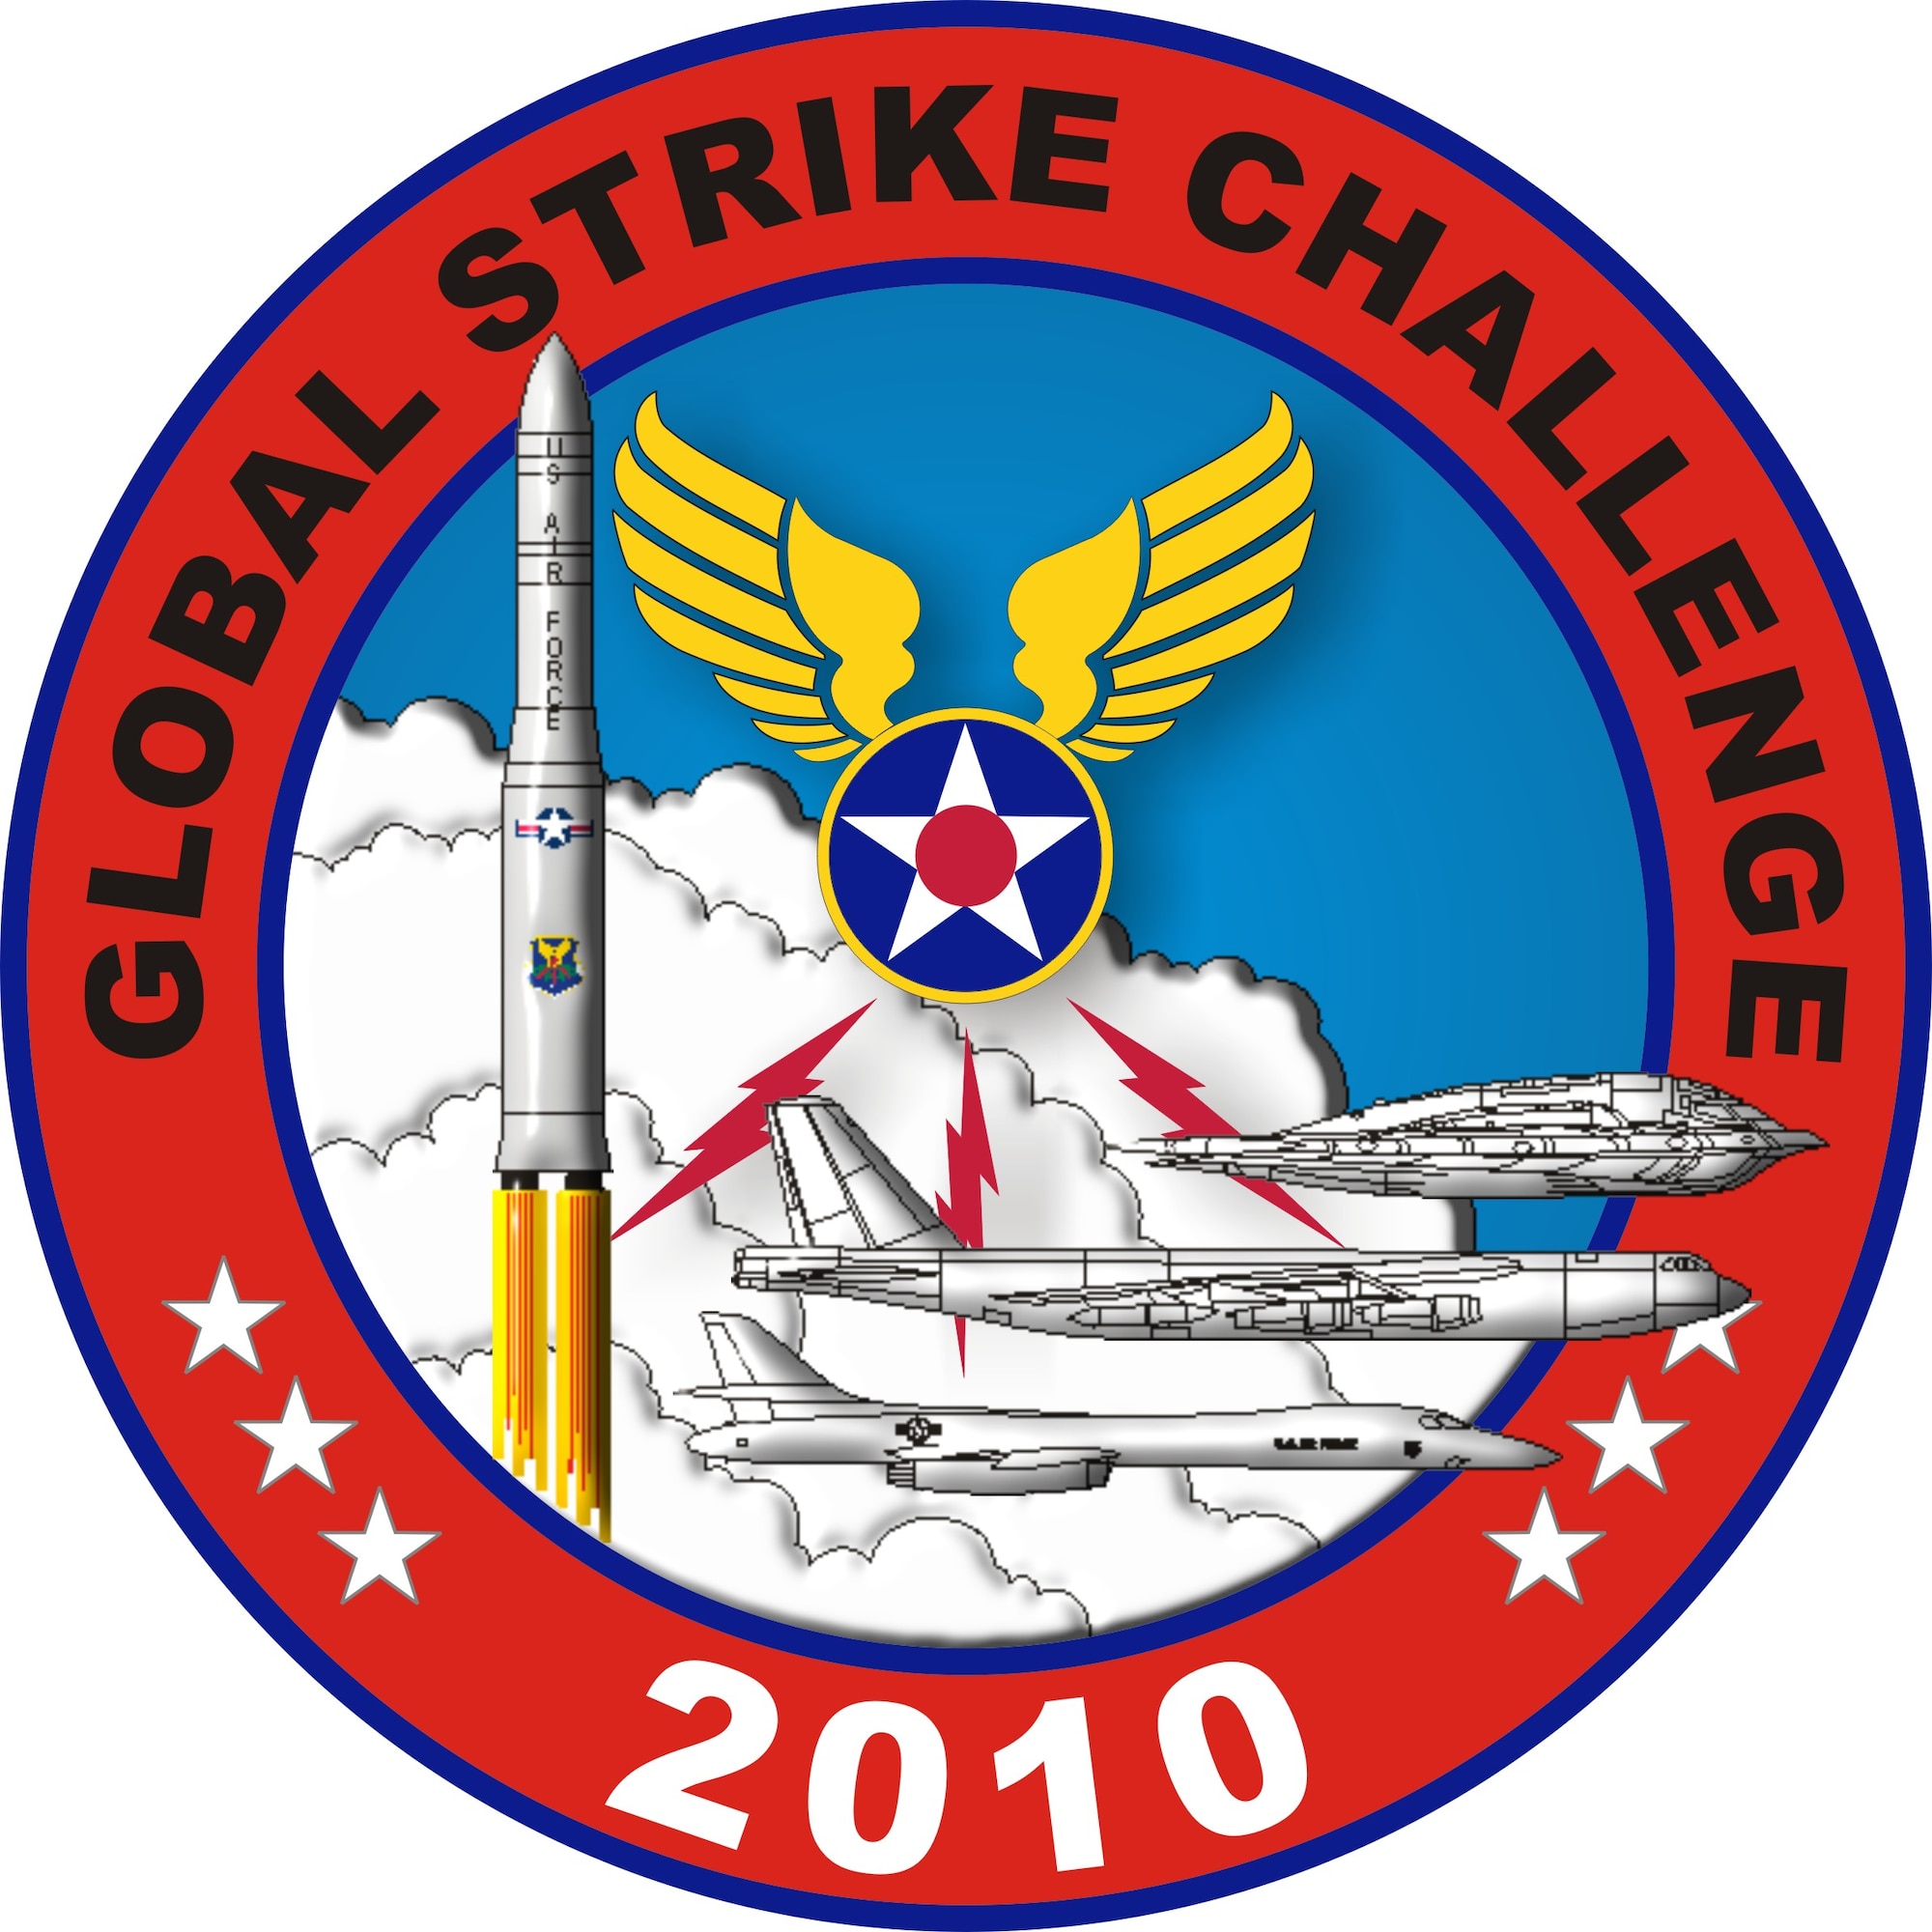 2010 Global Strike Challenge Logo